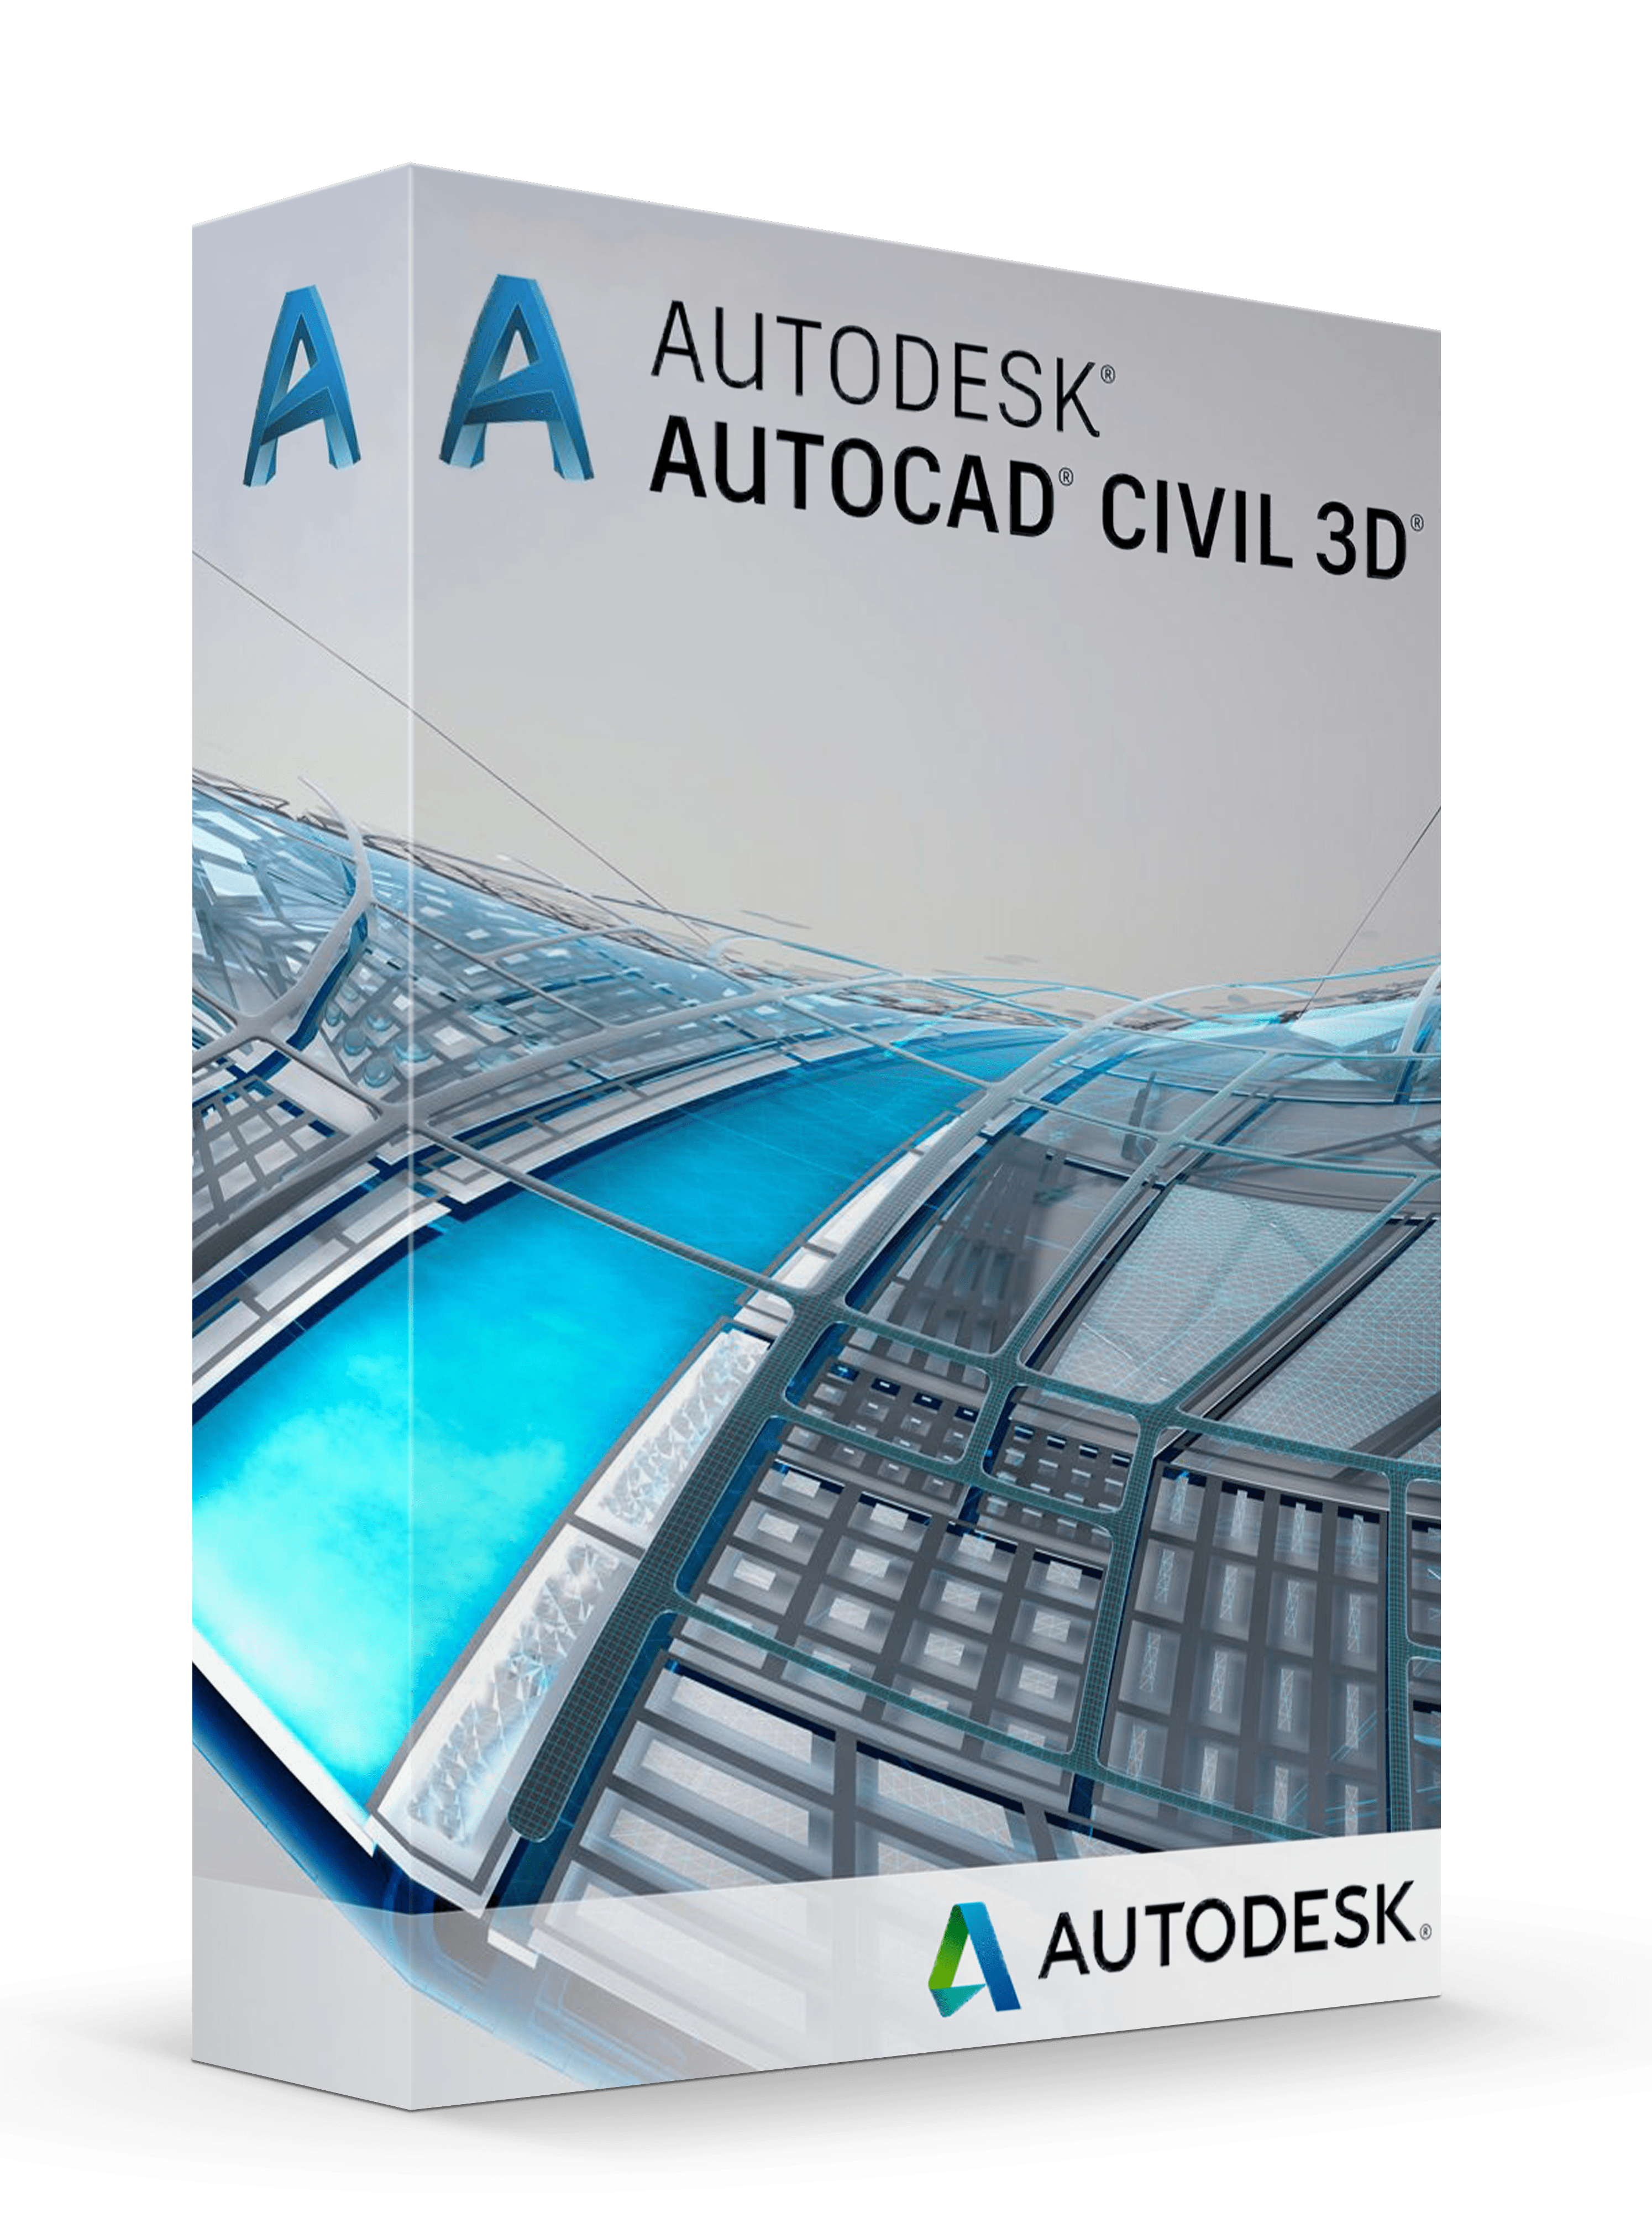 requirements for autodesk autocad architecture 2020